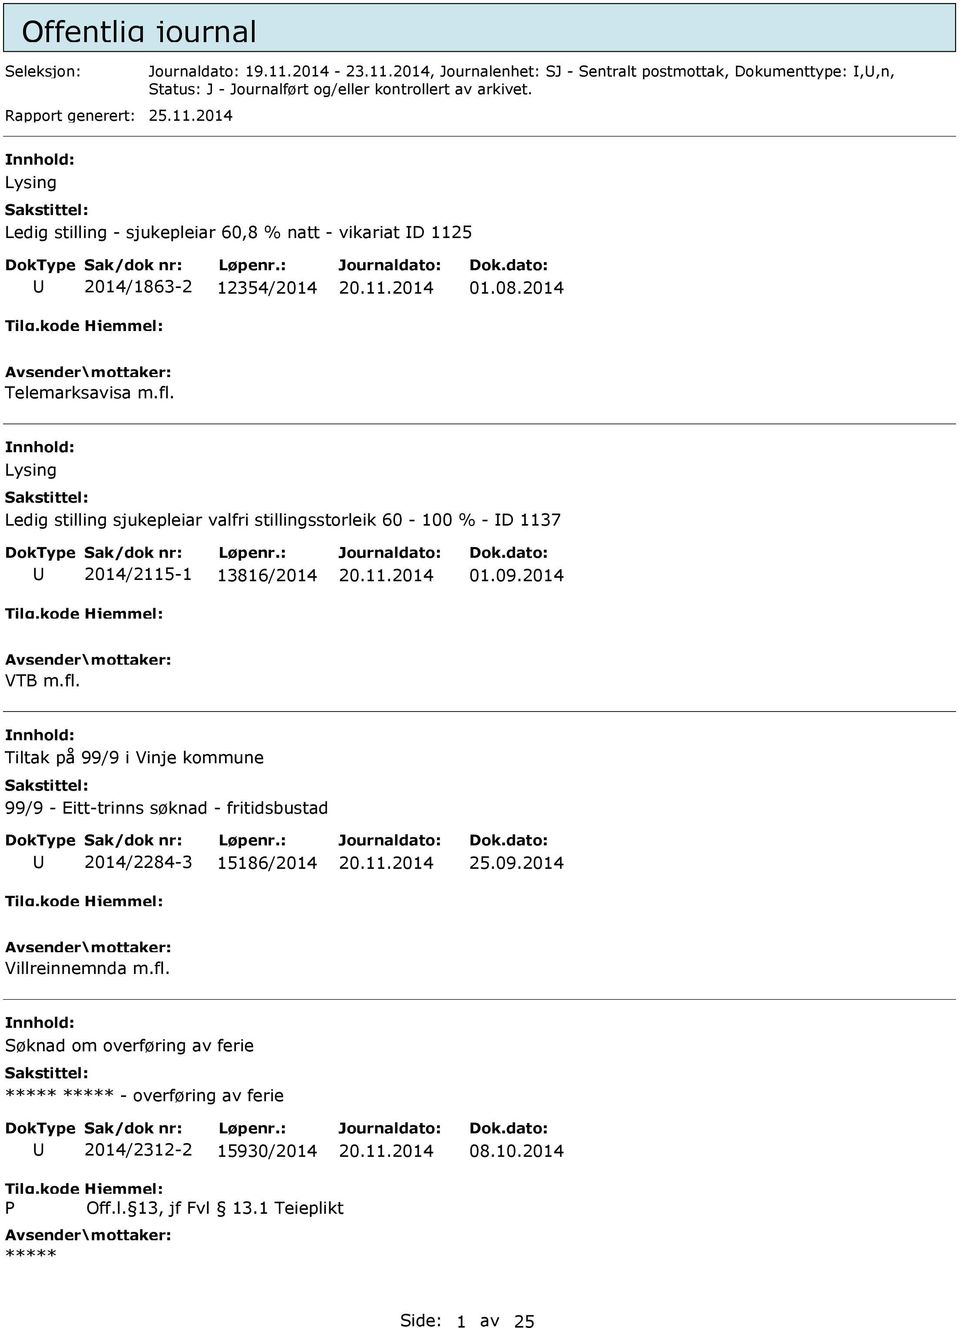 nnhold: Lysing Ledig stilling sjukepleiar valfri stillingsstorleik 60-100 % - D 1137 2014/2115-1 13816/2014 01.09.2014 VTB m.fl.